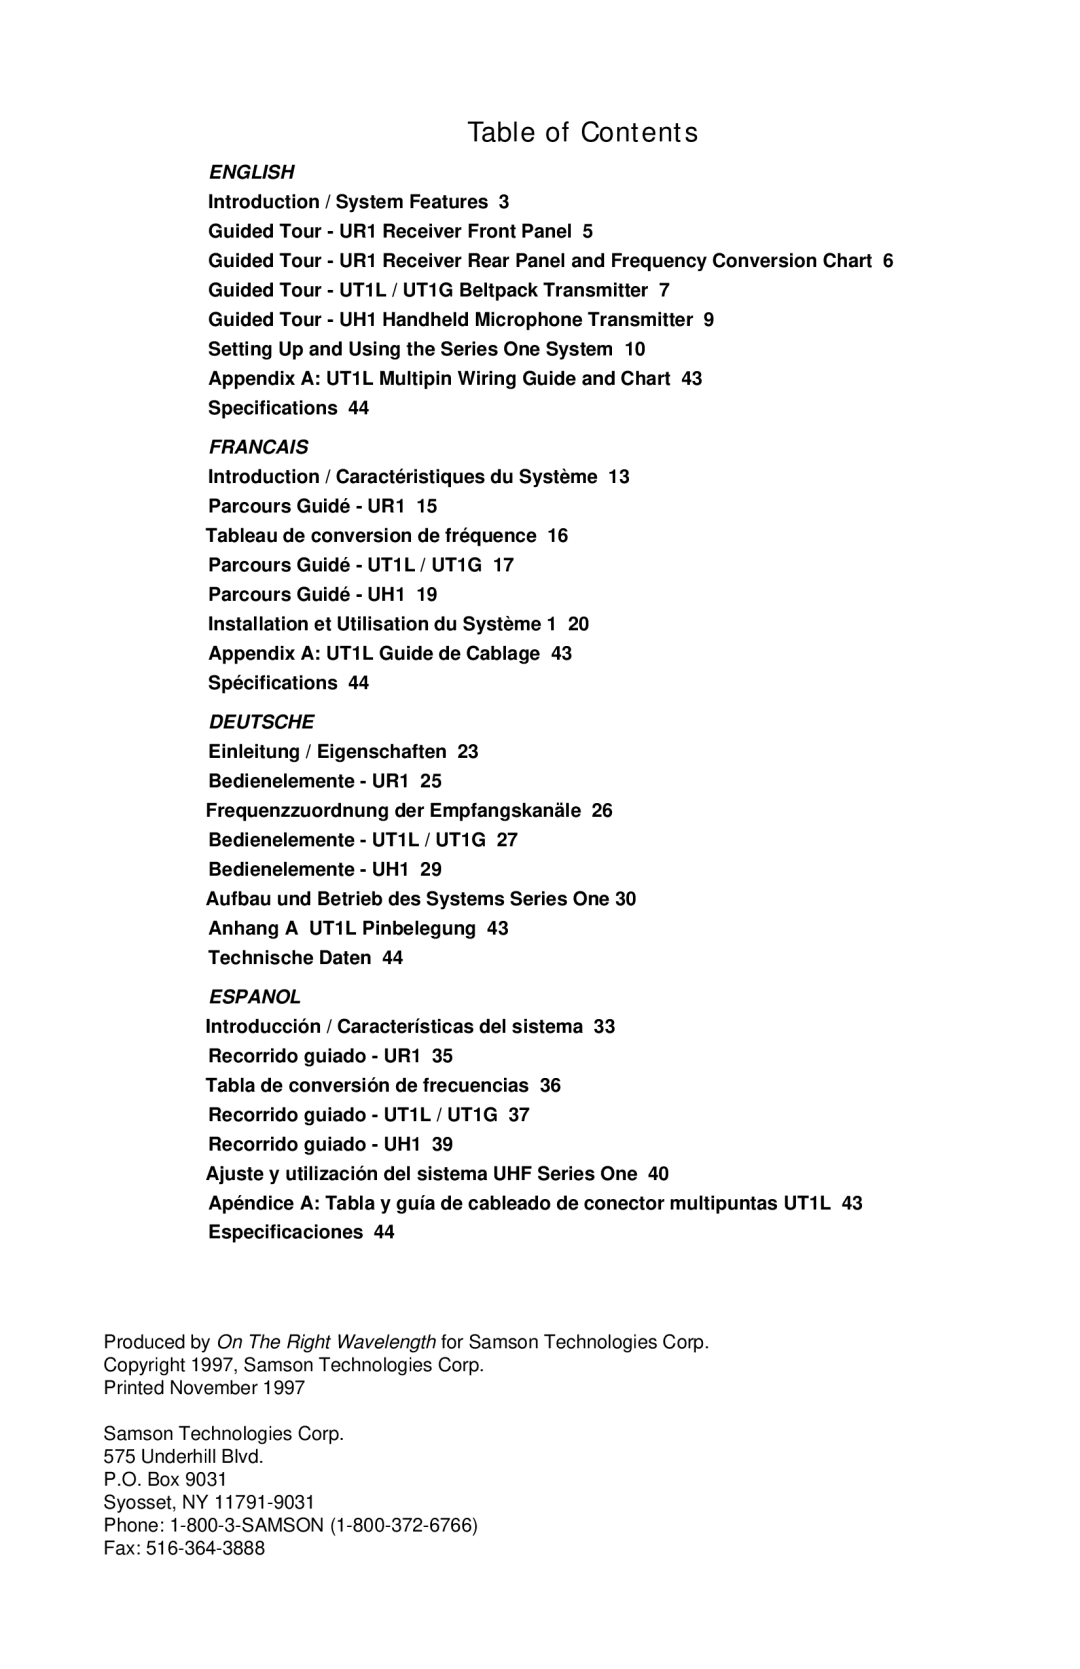 Samson UHF 801 owner manual Table of Contents, English, Francais, Deutsche, Espanol 